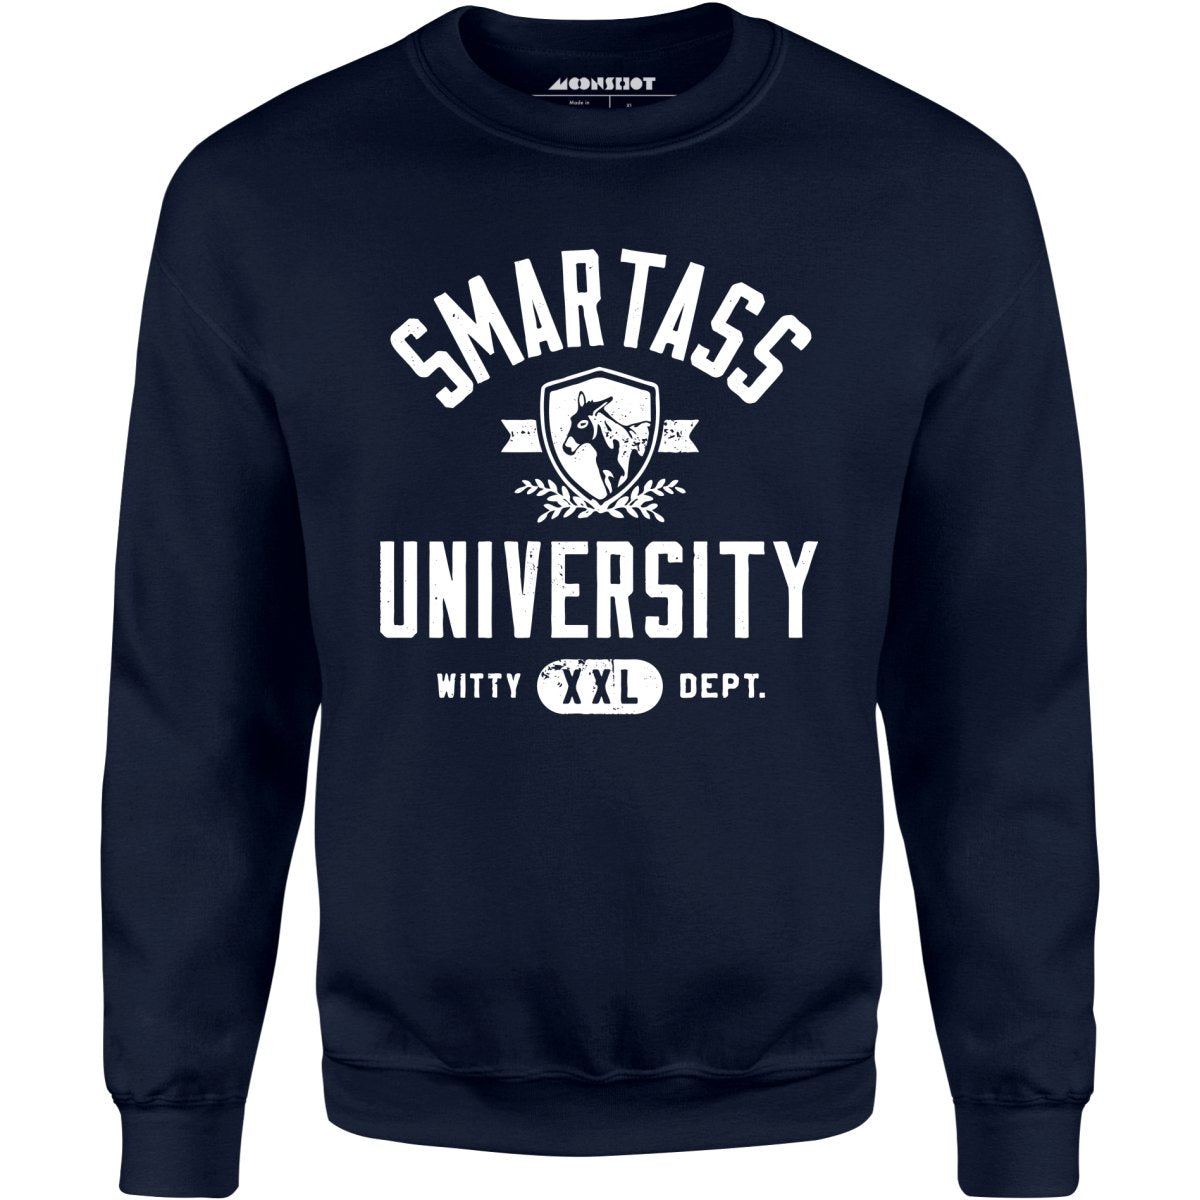 Smartass University - Unisex Sweatshirt